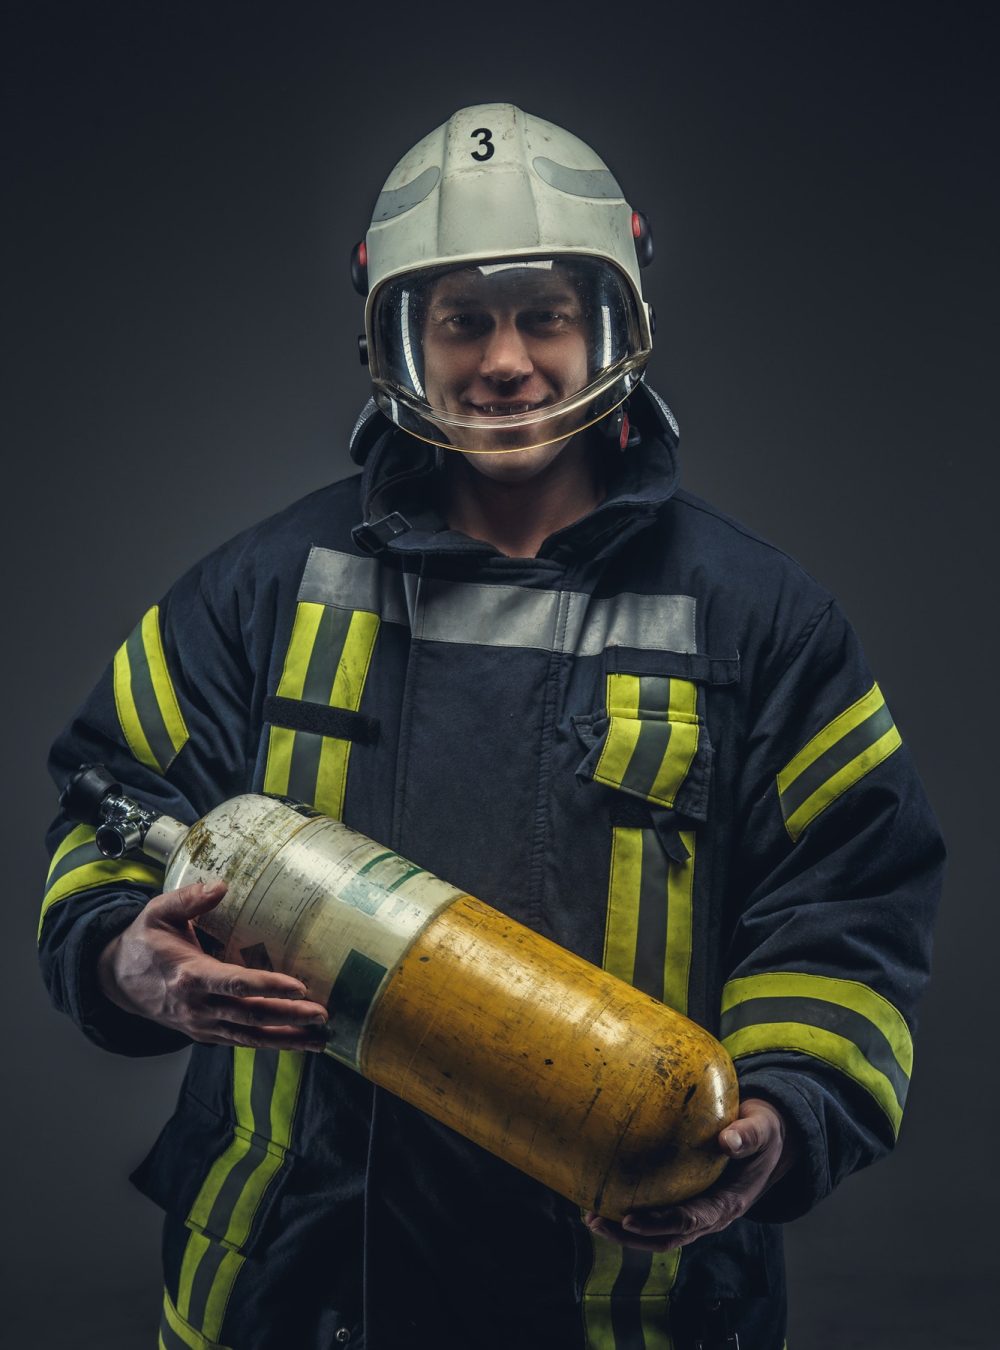 firefighter-rescue-holds-yellow-oxygen-tank-.jpg